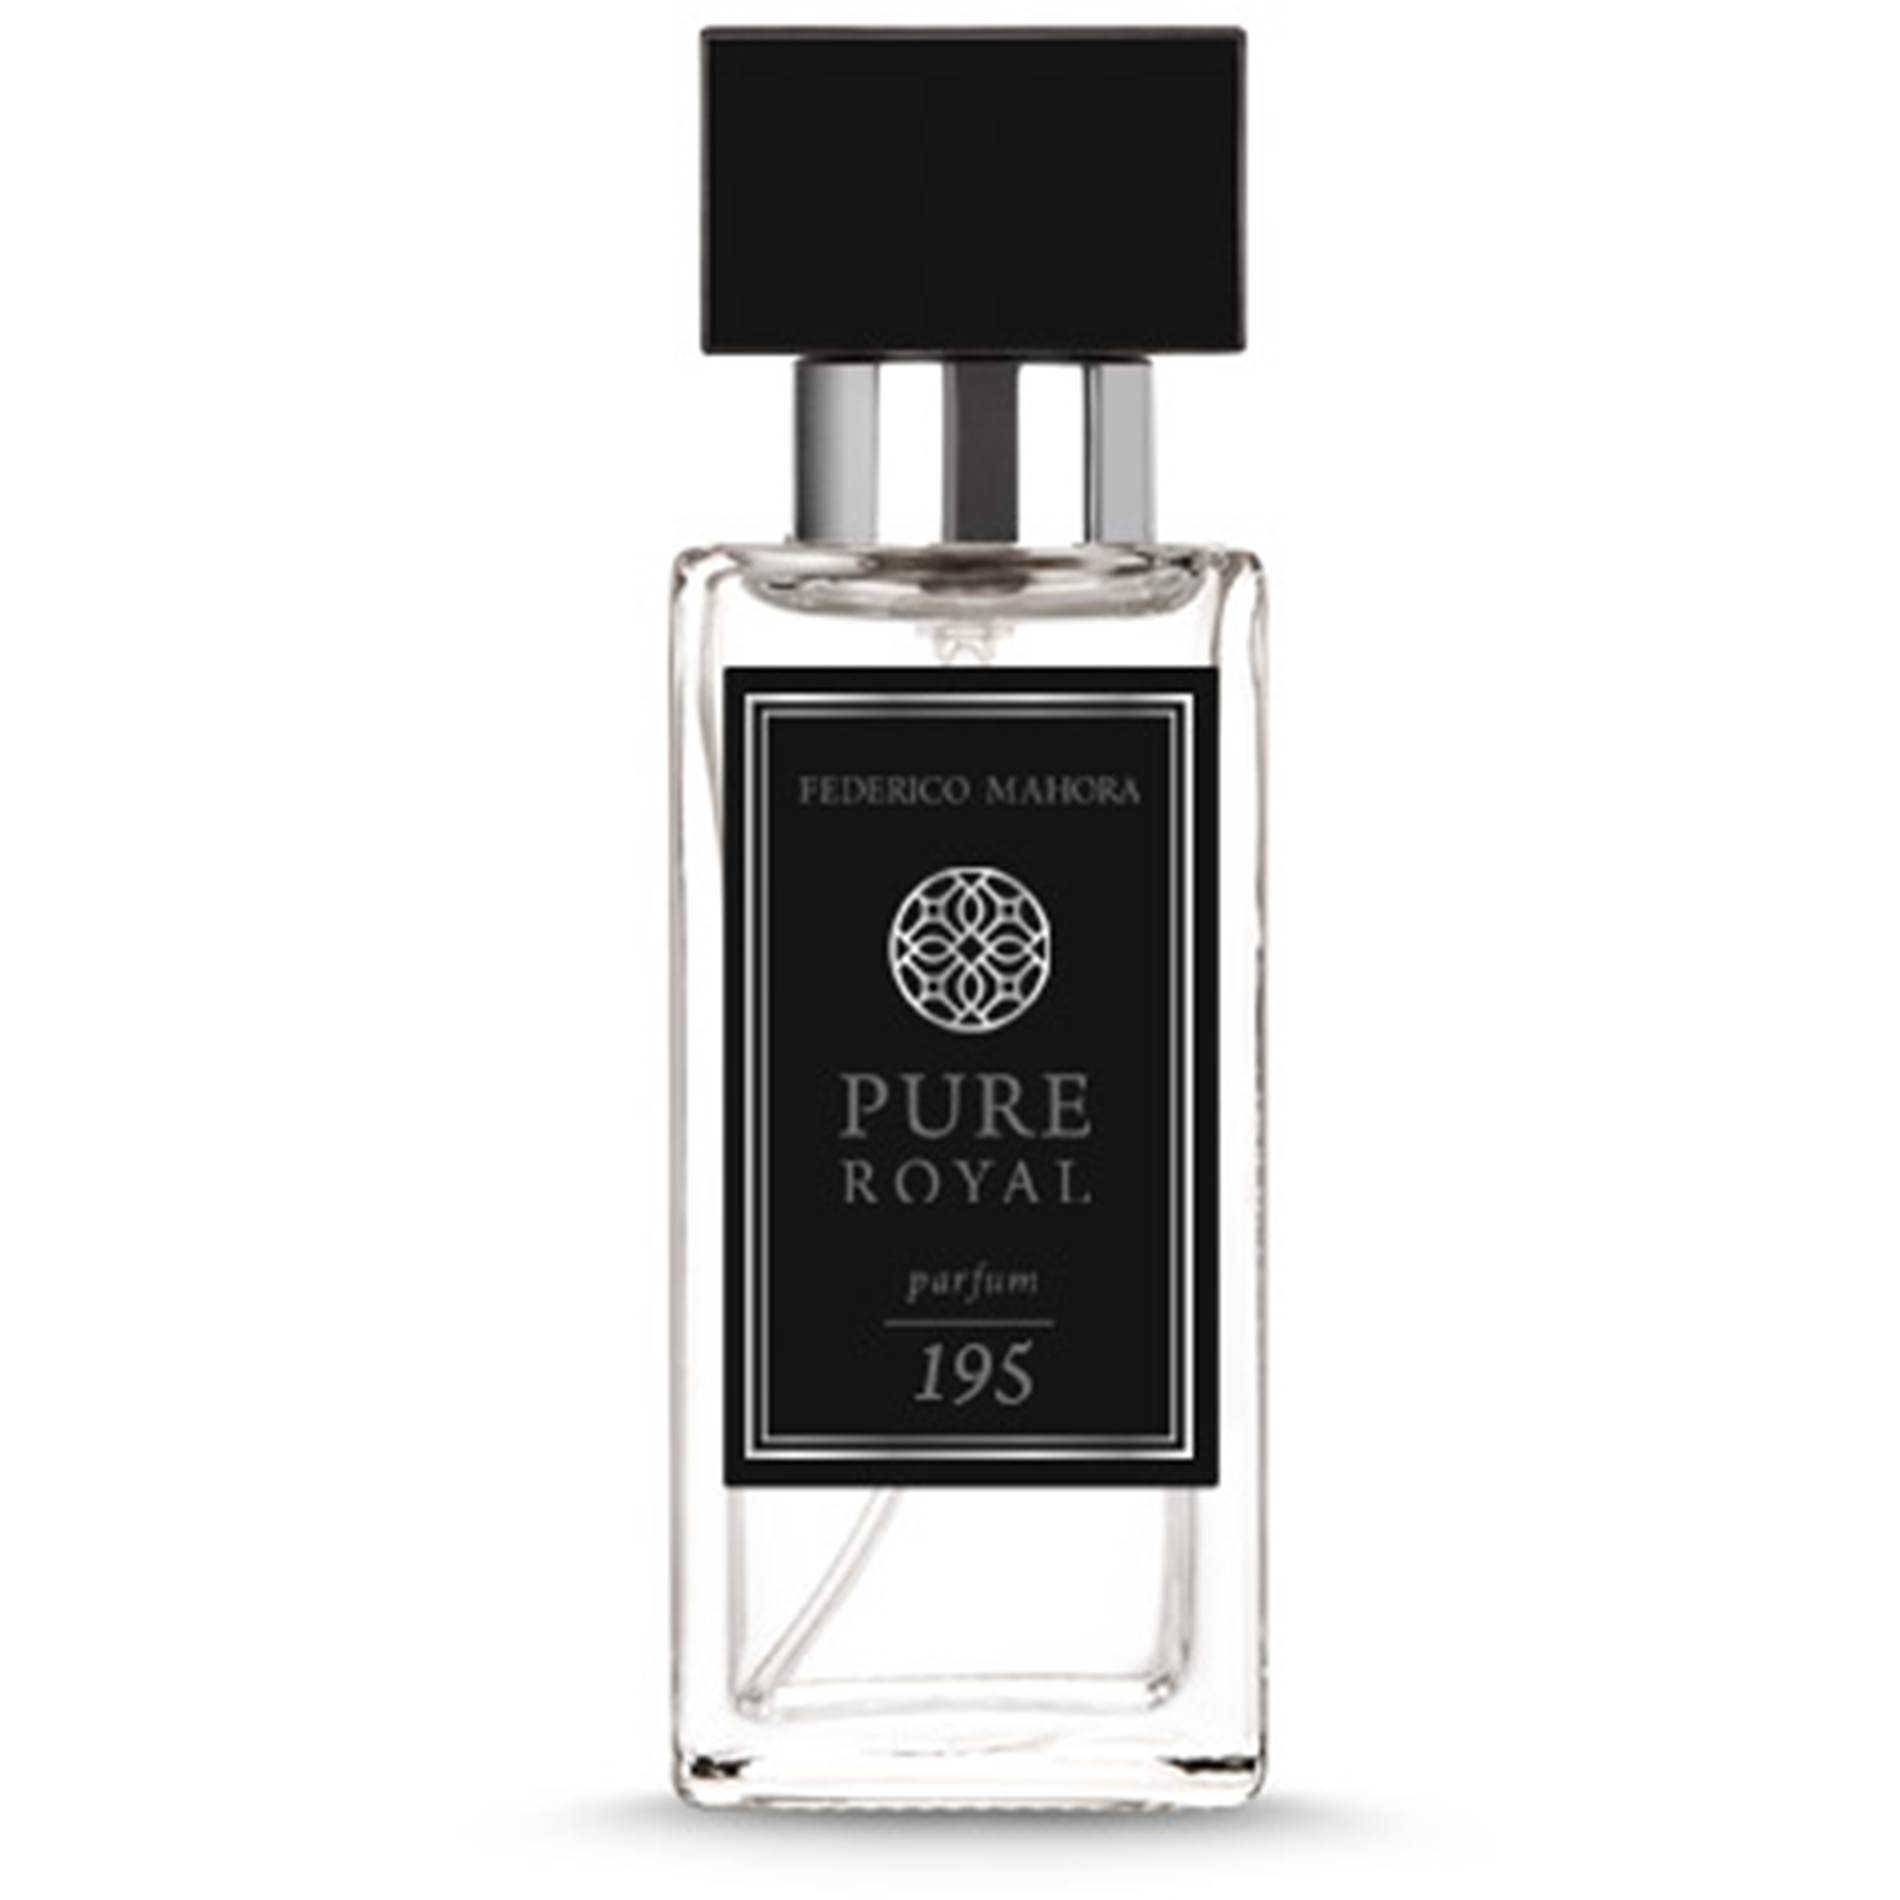 Pure Royal 195 Parfum Federico Mahora